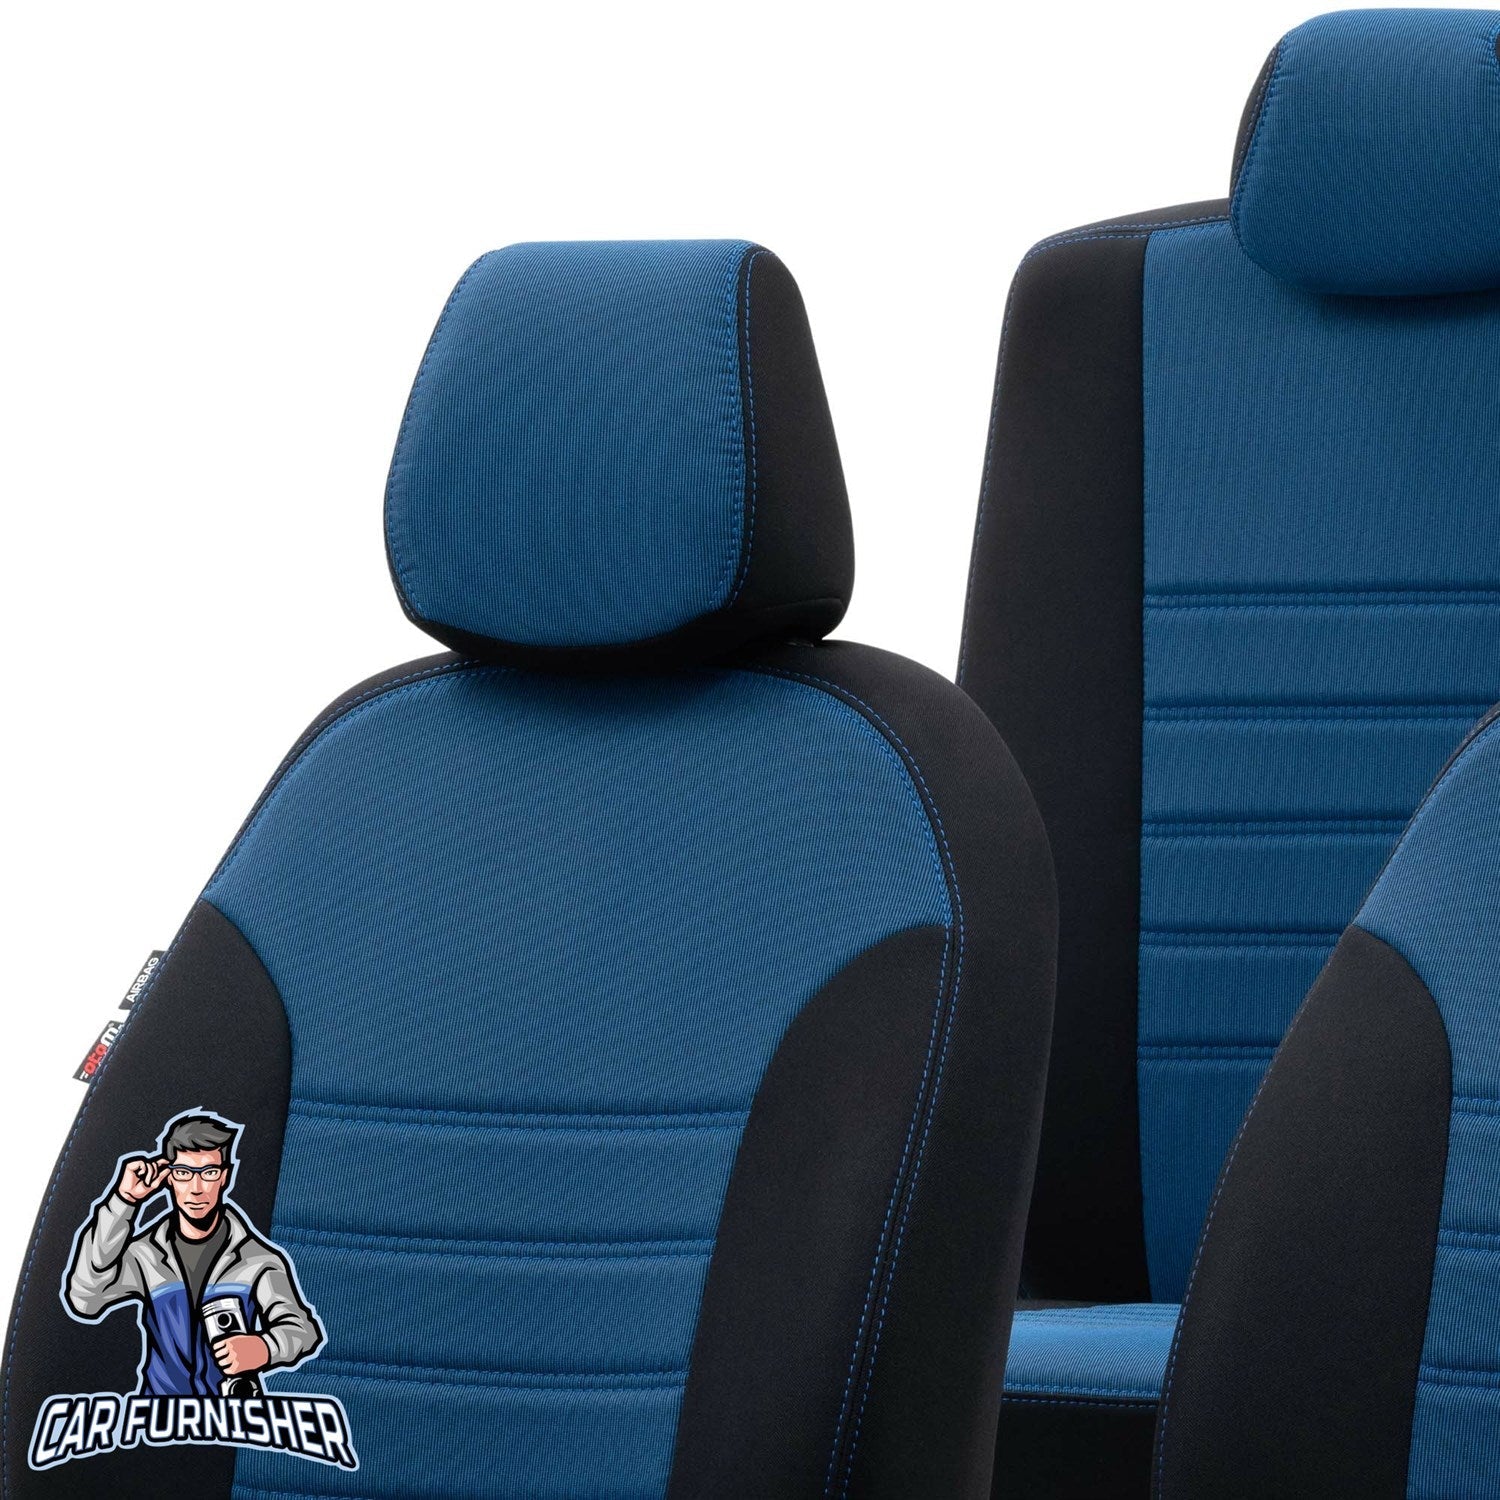 Nissan Navara Seat Covers Original Jacquard Design Blue Jacquard Fabric